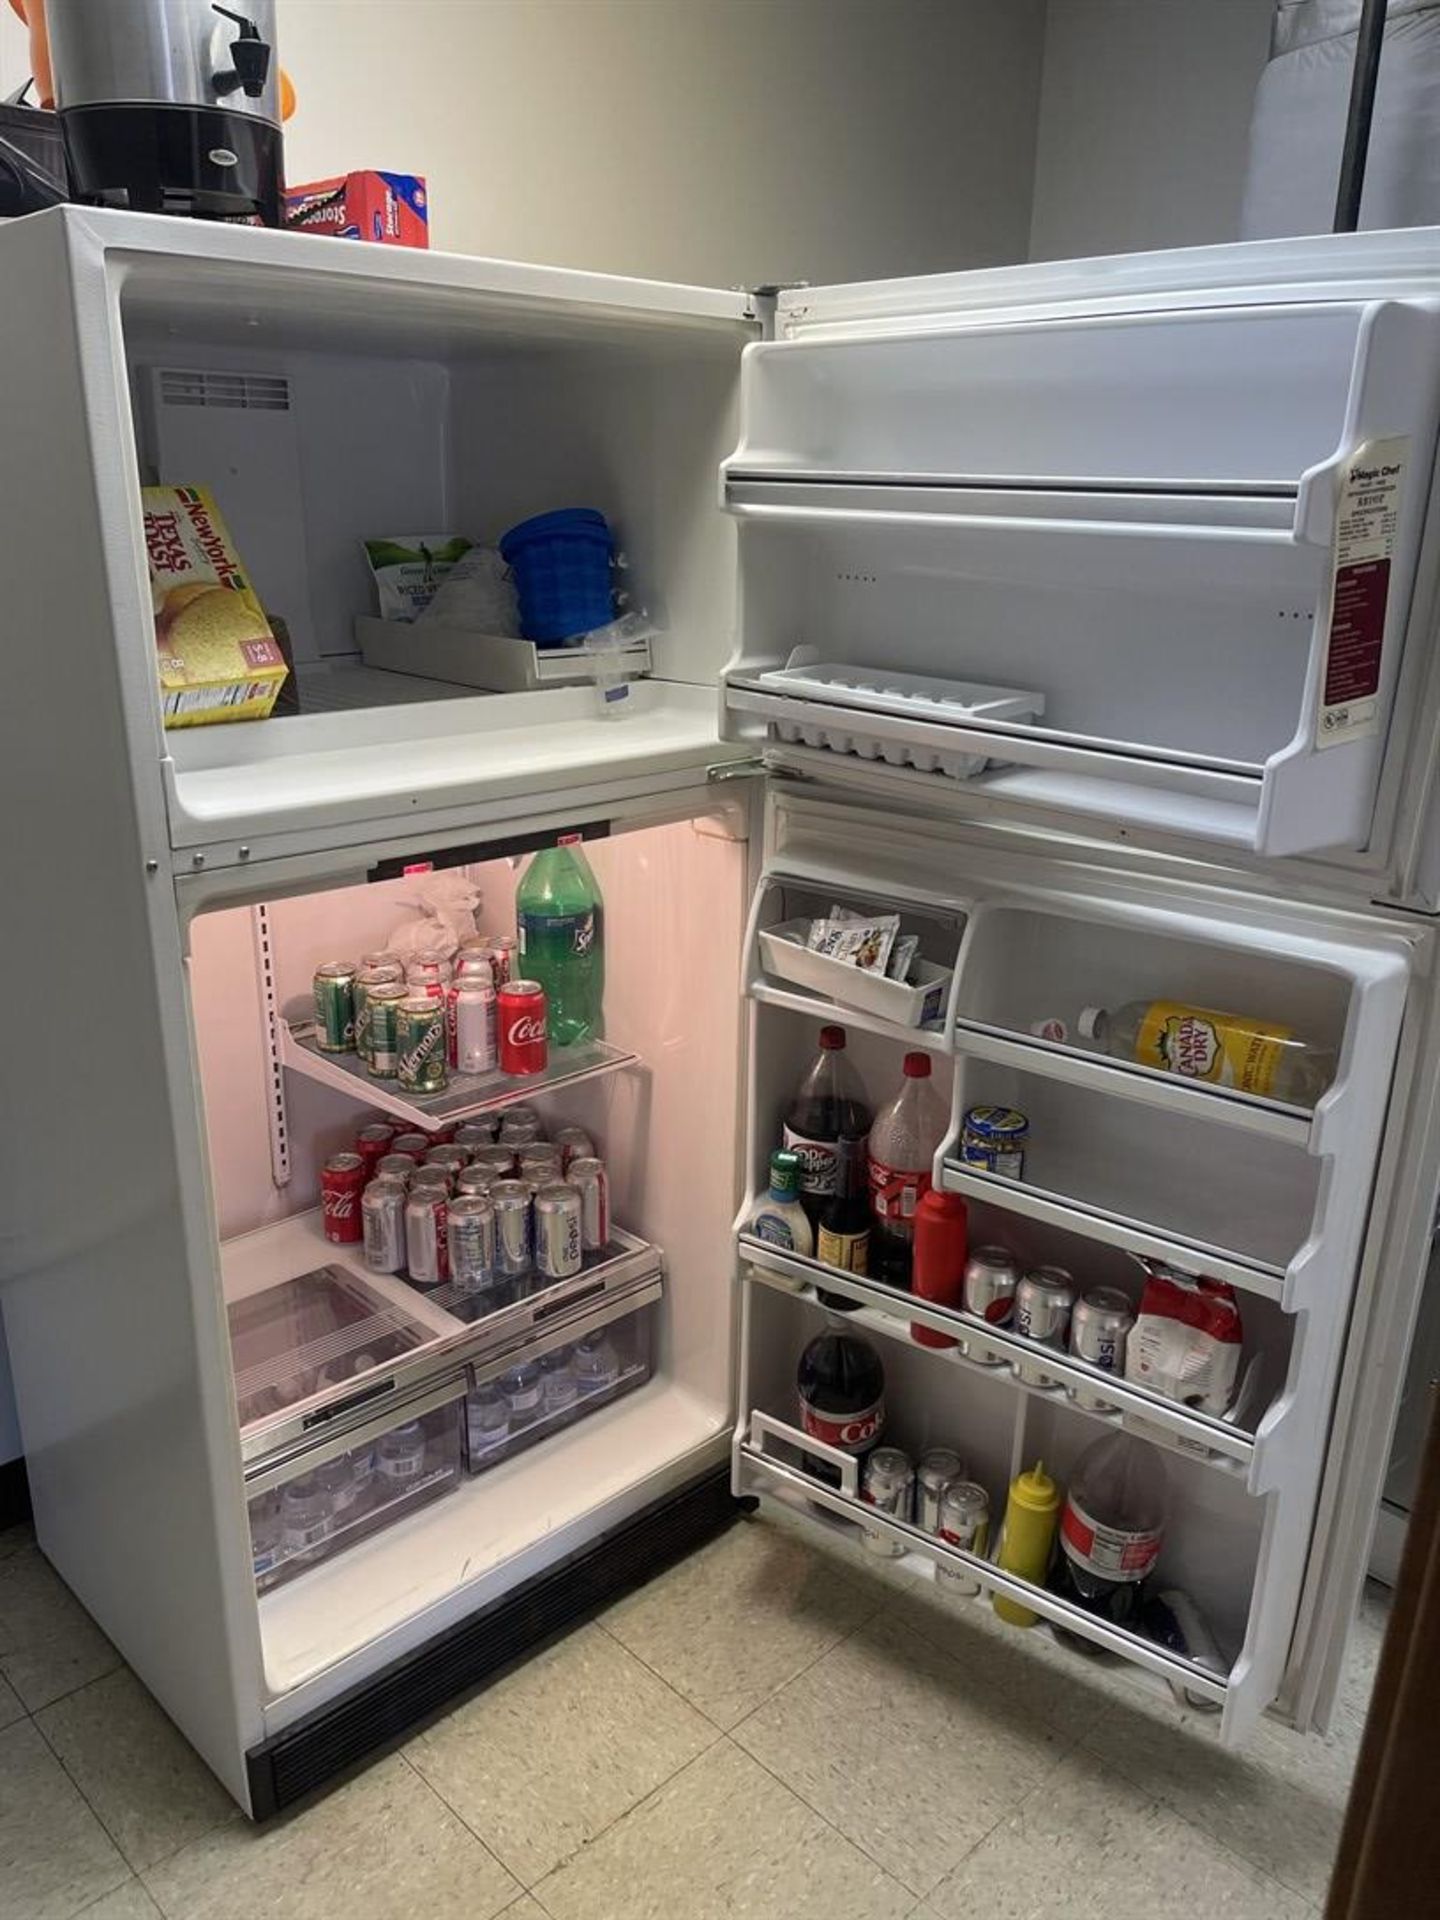 MAGIC CHEF Refrigerator/Freezer - Image 2 of 2